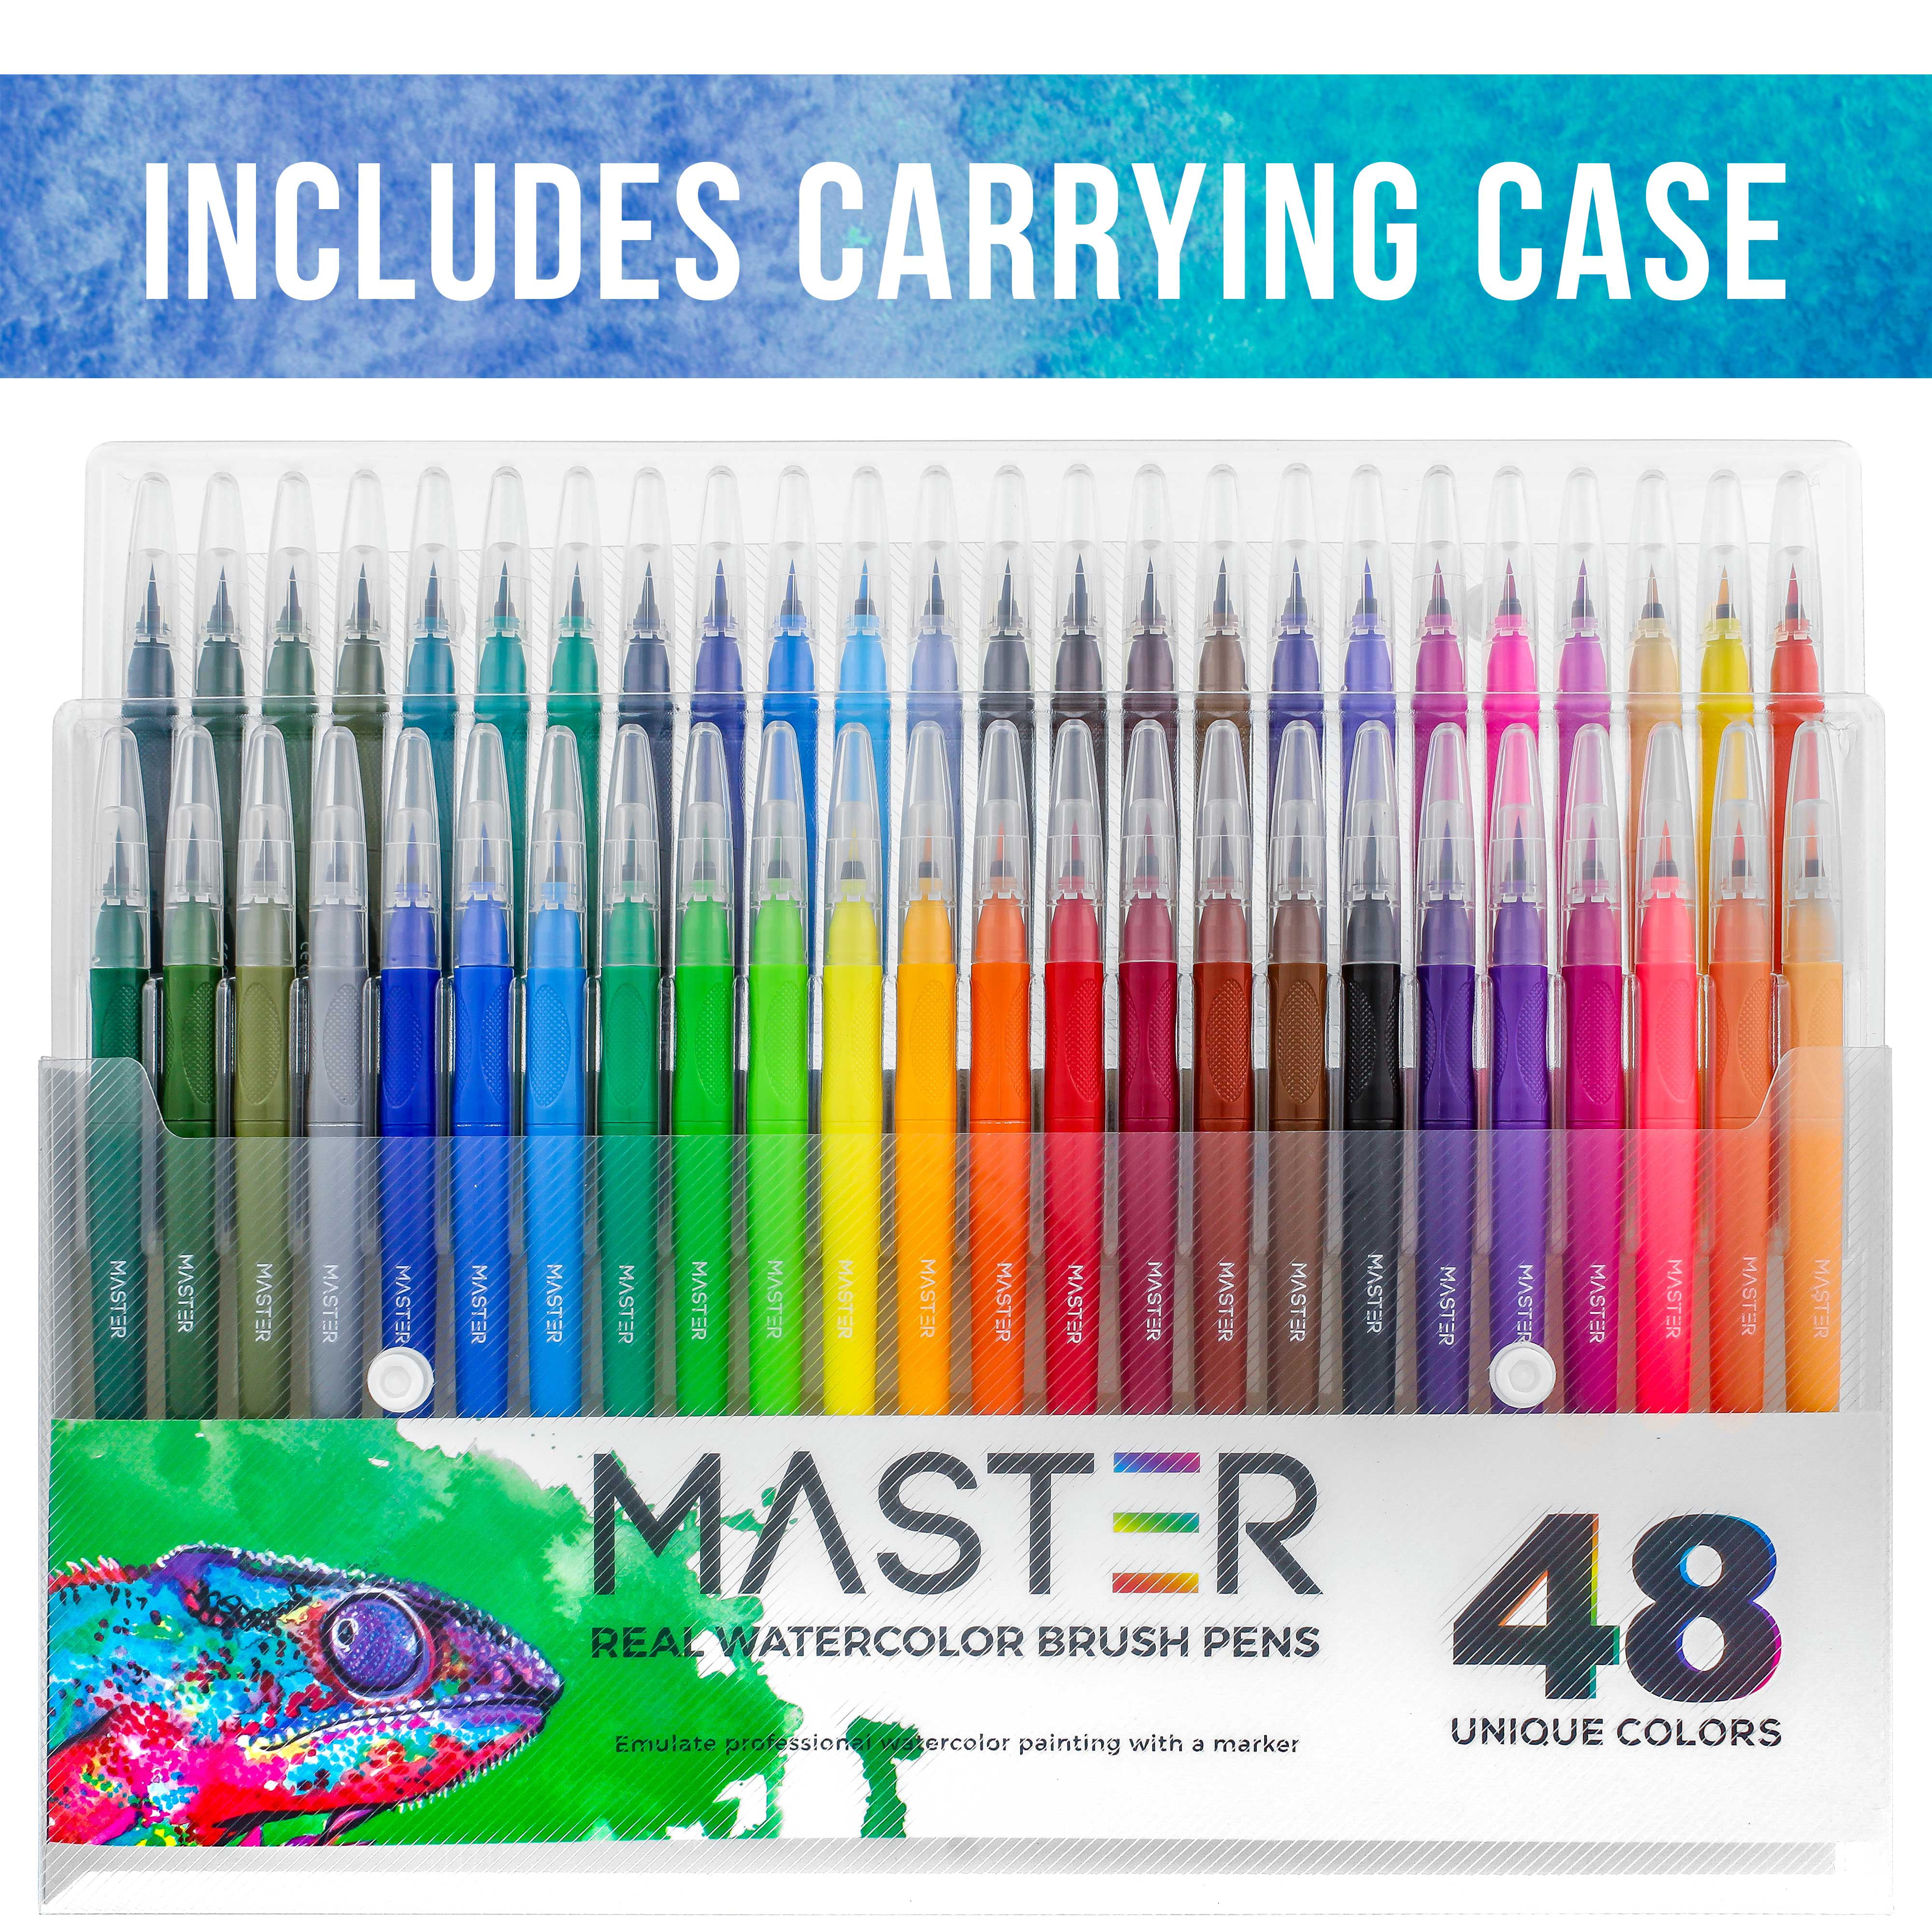 Deli Soft Head Watercolor Pen Set 24 36 48 Colors Professional Washable  Hand-painted Watercolor Pens Children Art Painting Brush